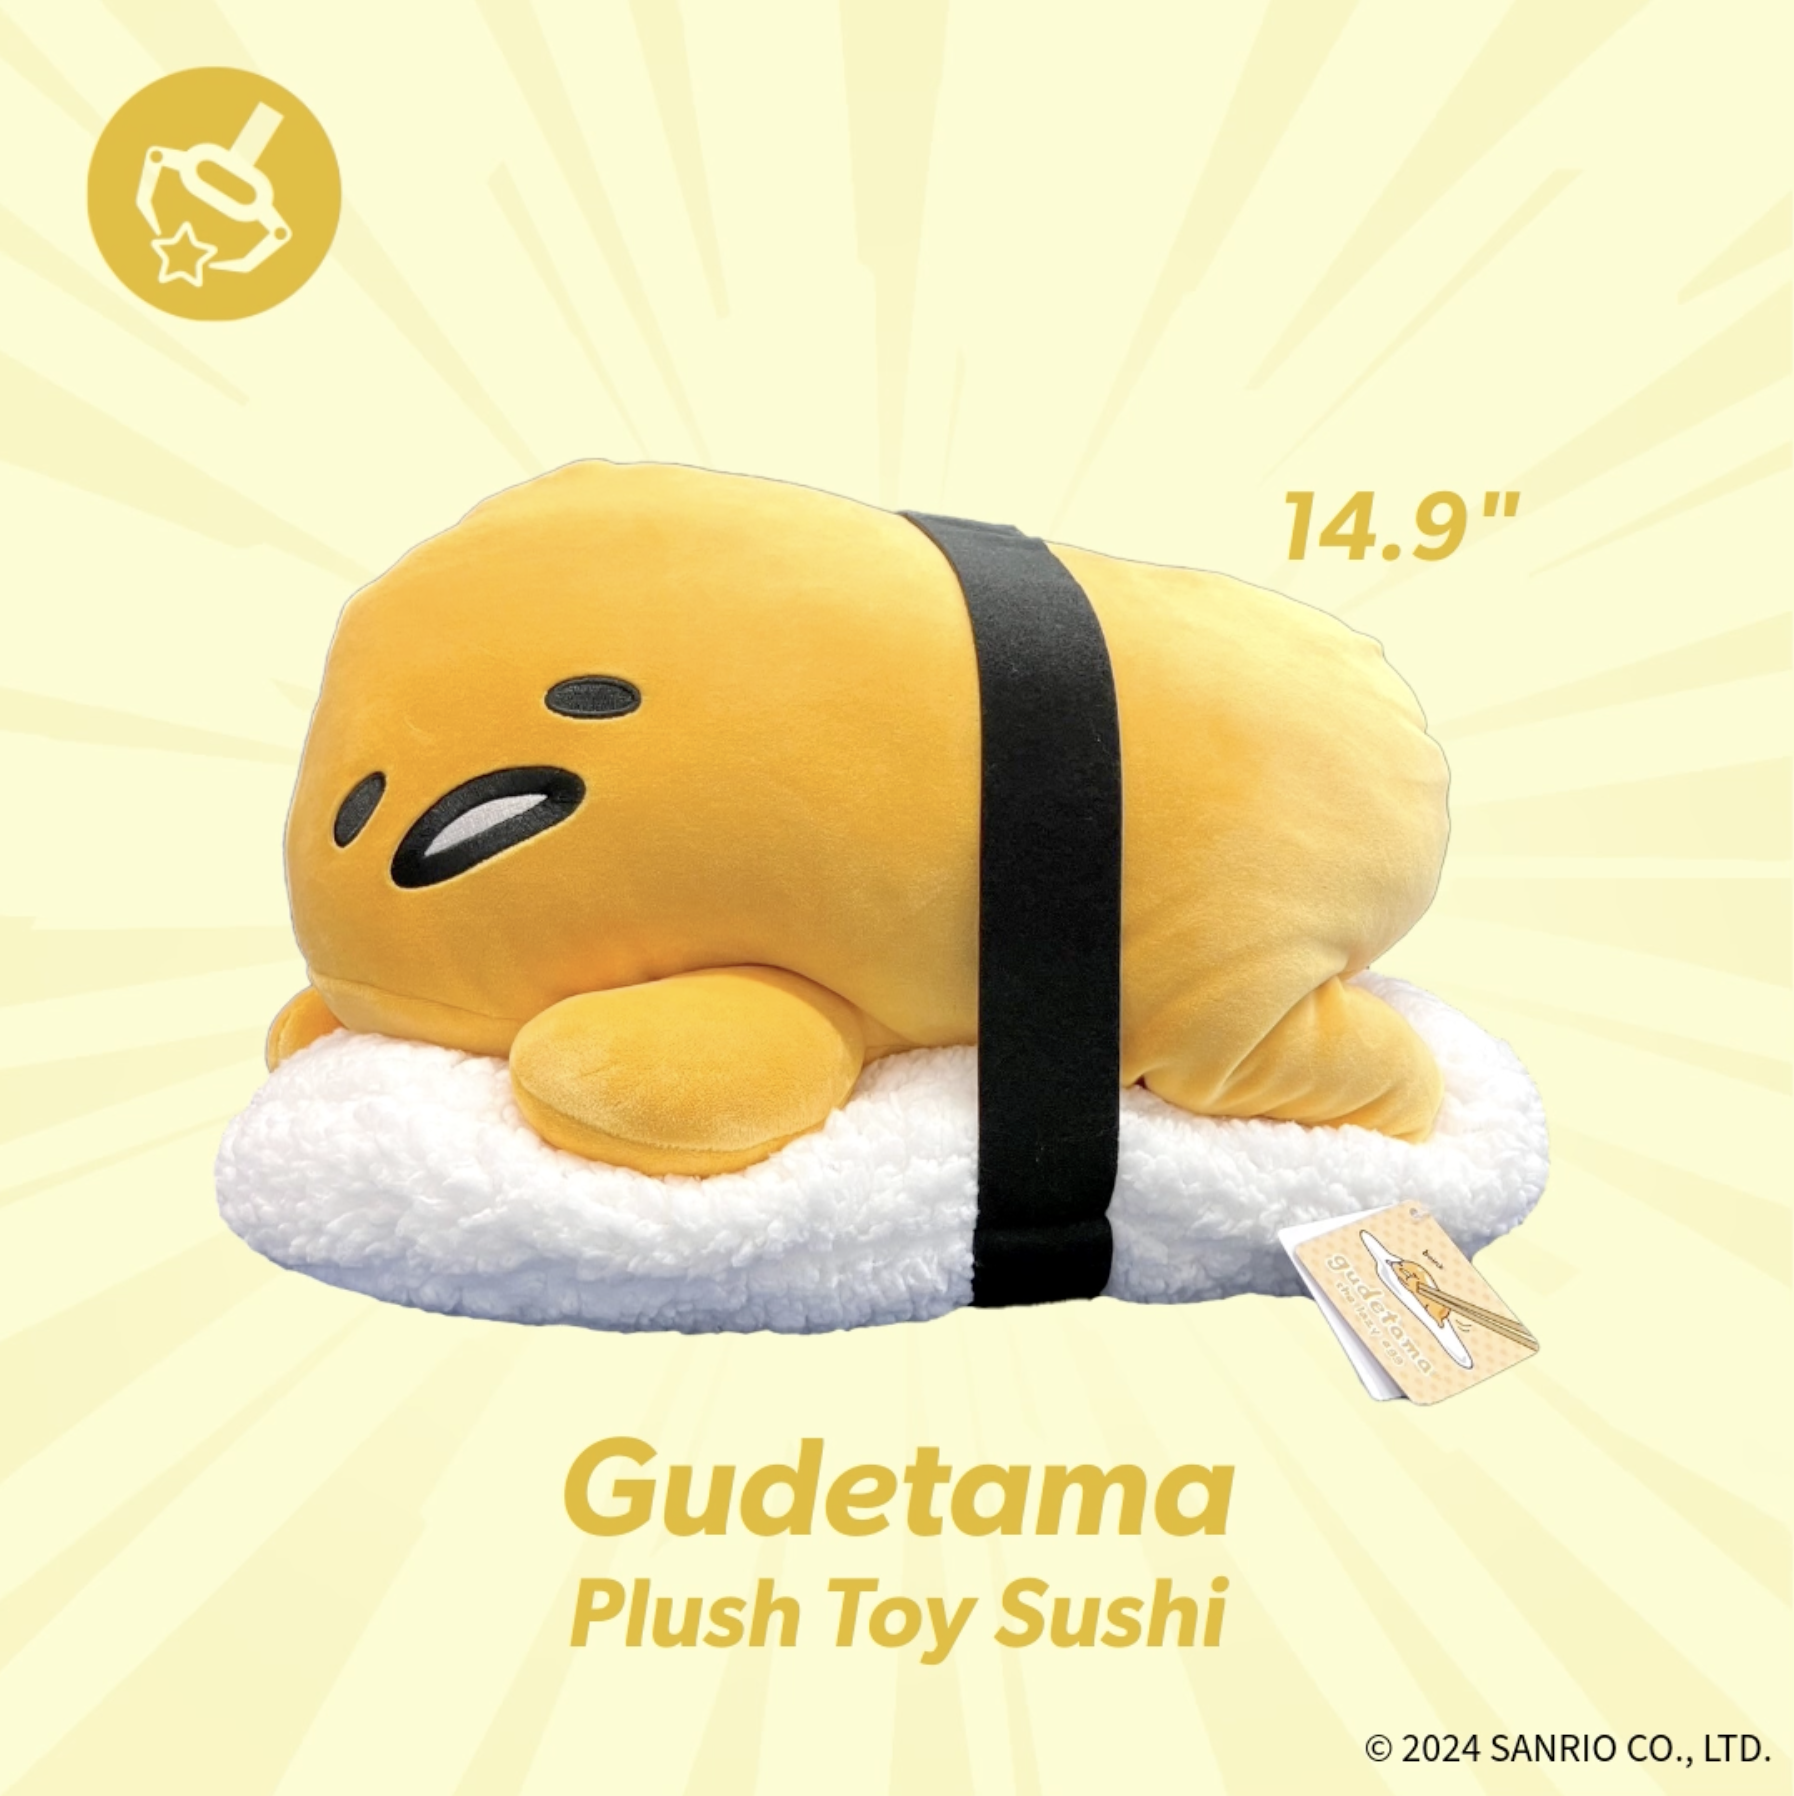 Round1 Arcade Crace Game Sanrio Gudetama Plush Toy Sushi 14.9"